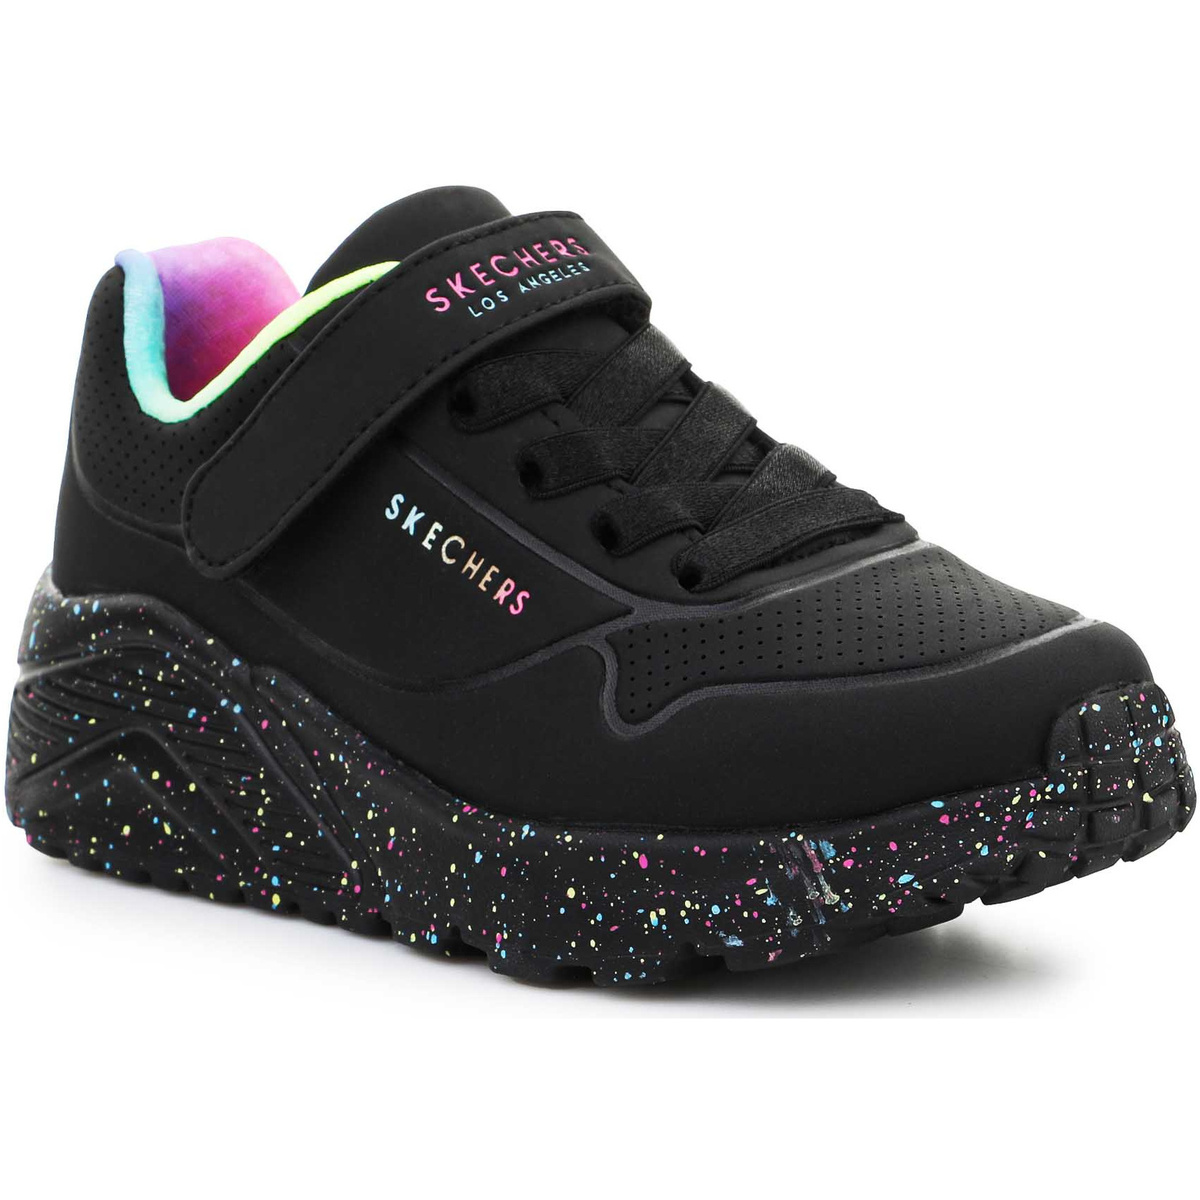 Xαμηλά Sneakers Skechers Uno Lite – RAINBOW SPECKS 310457-BKMT Συνθετικό